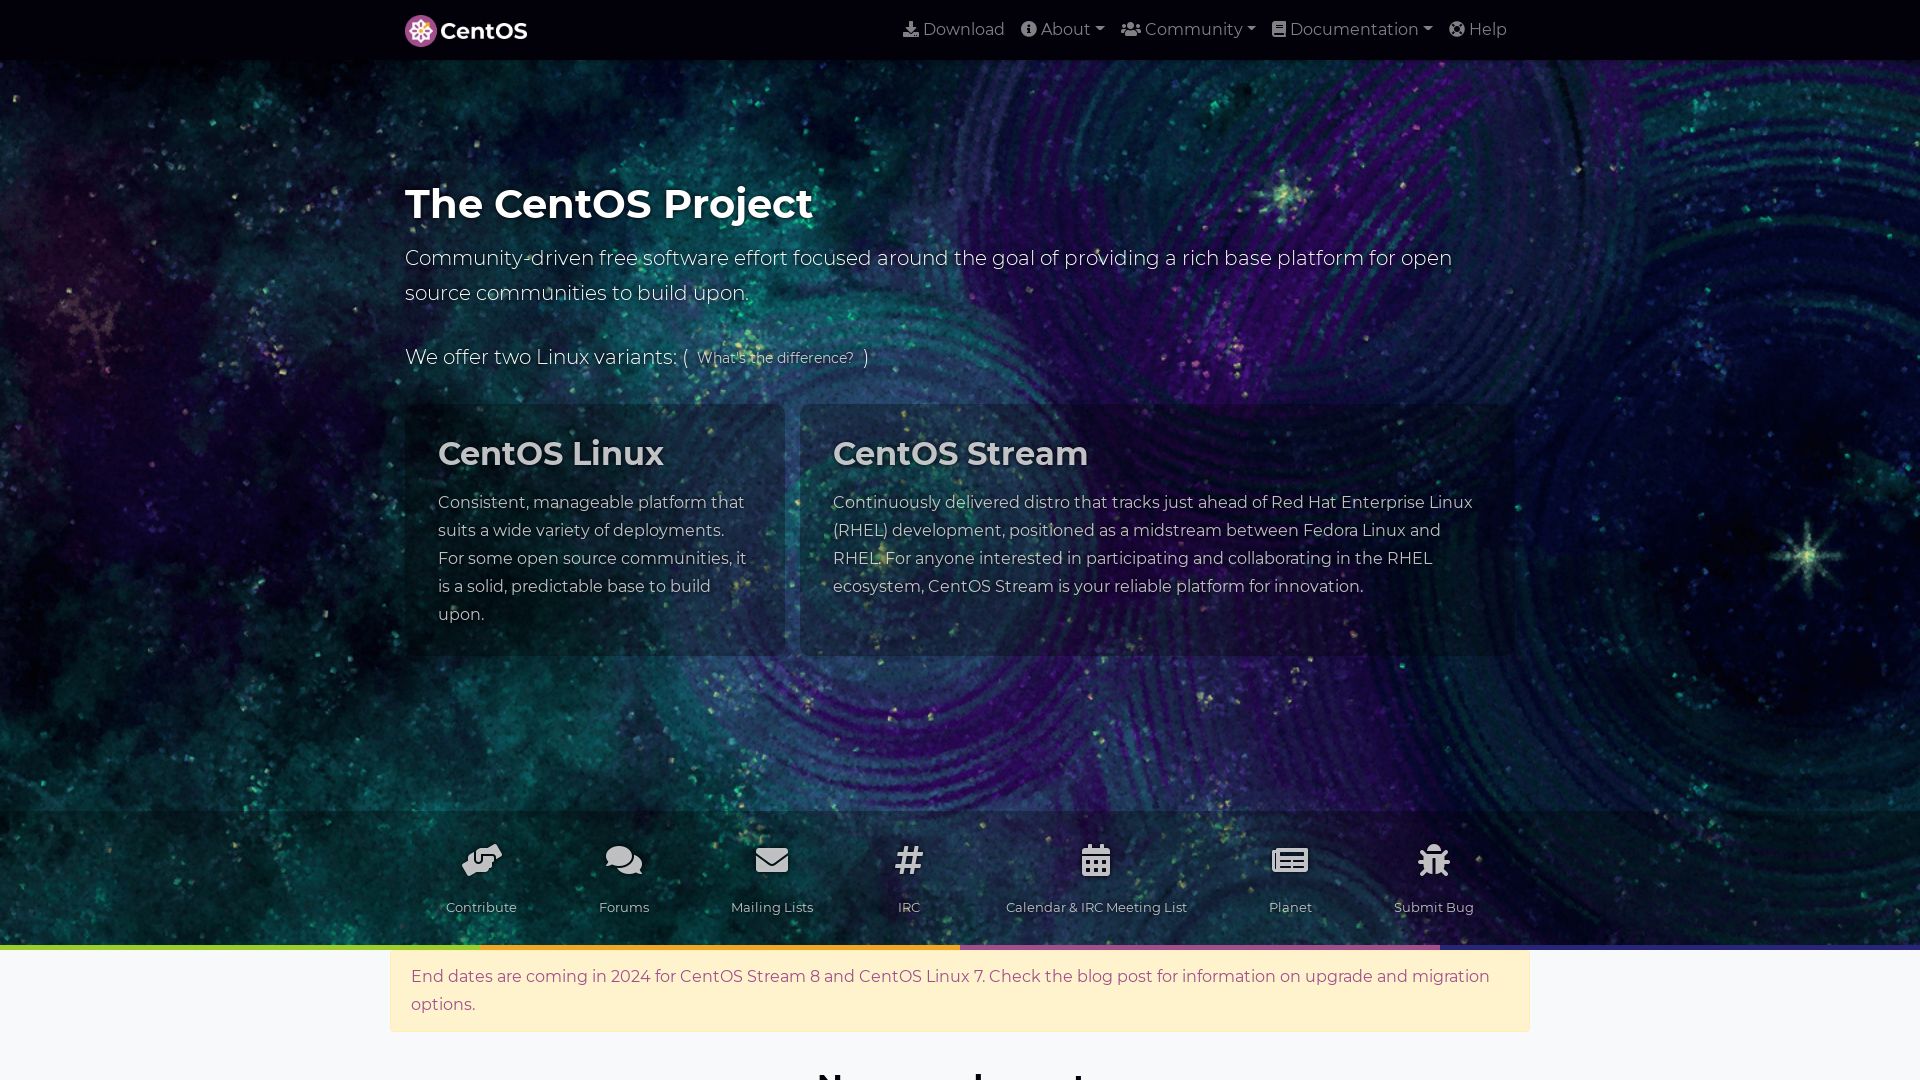 вебсайт centos.org Є   ONLINE